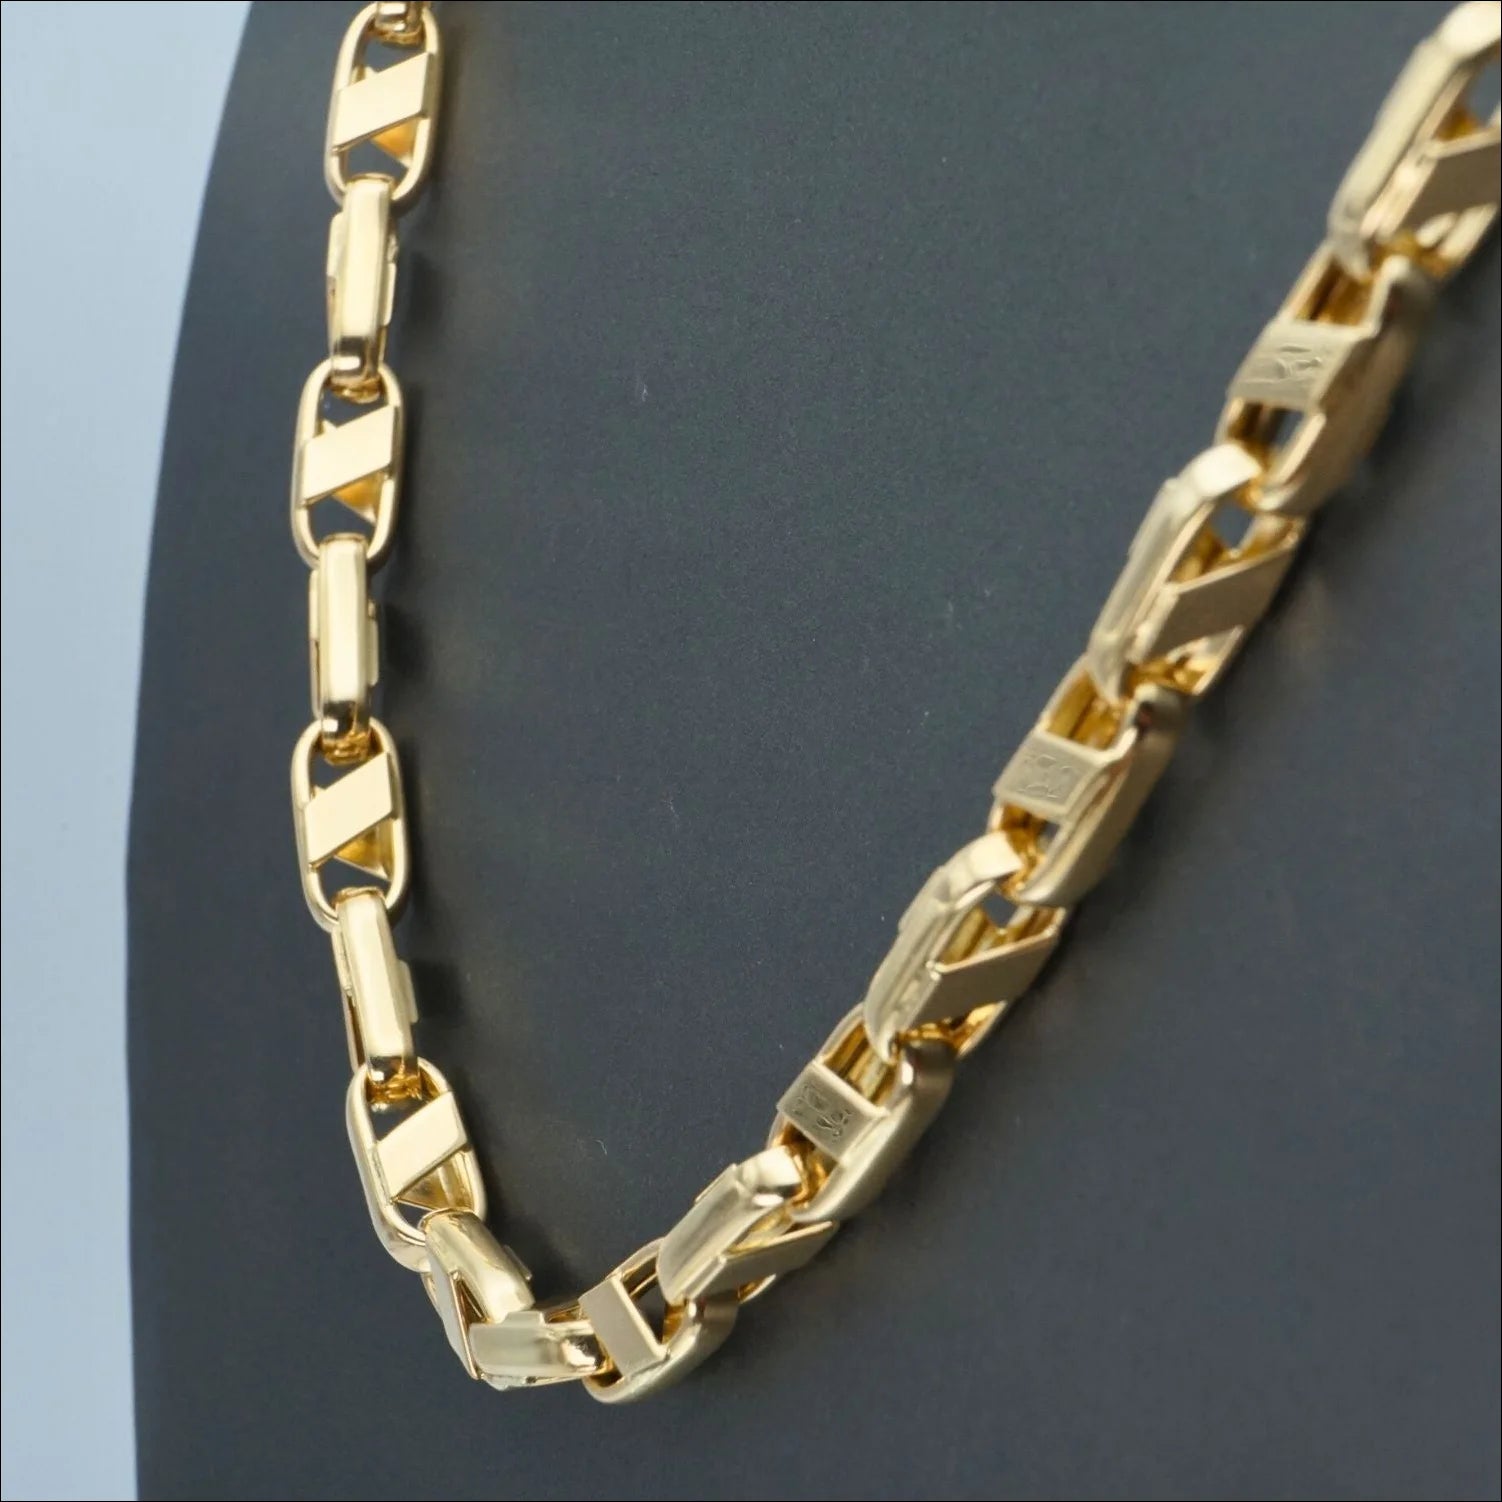 Luxury 18k Gold Chain - Boston Exclusivity | Above $1000